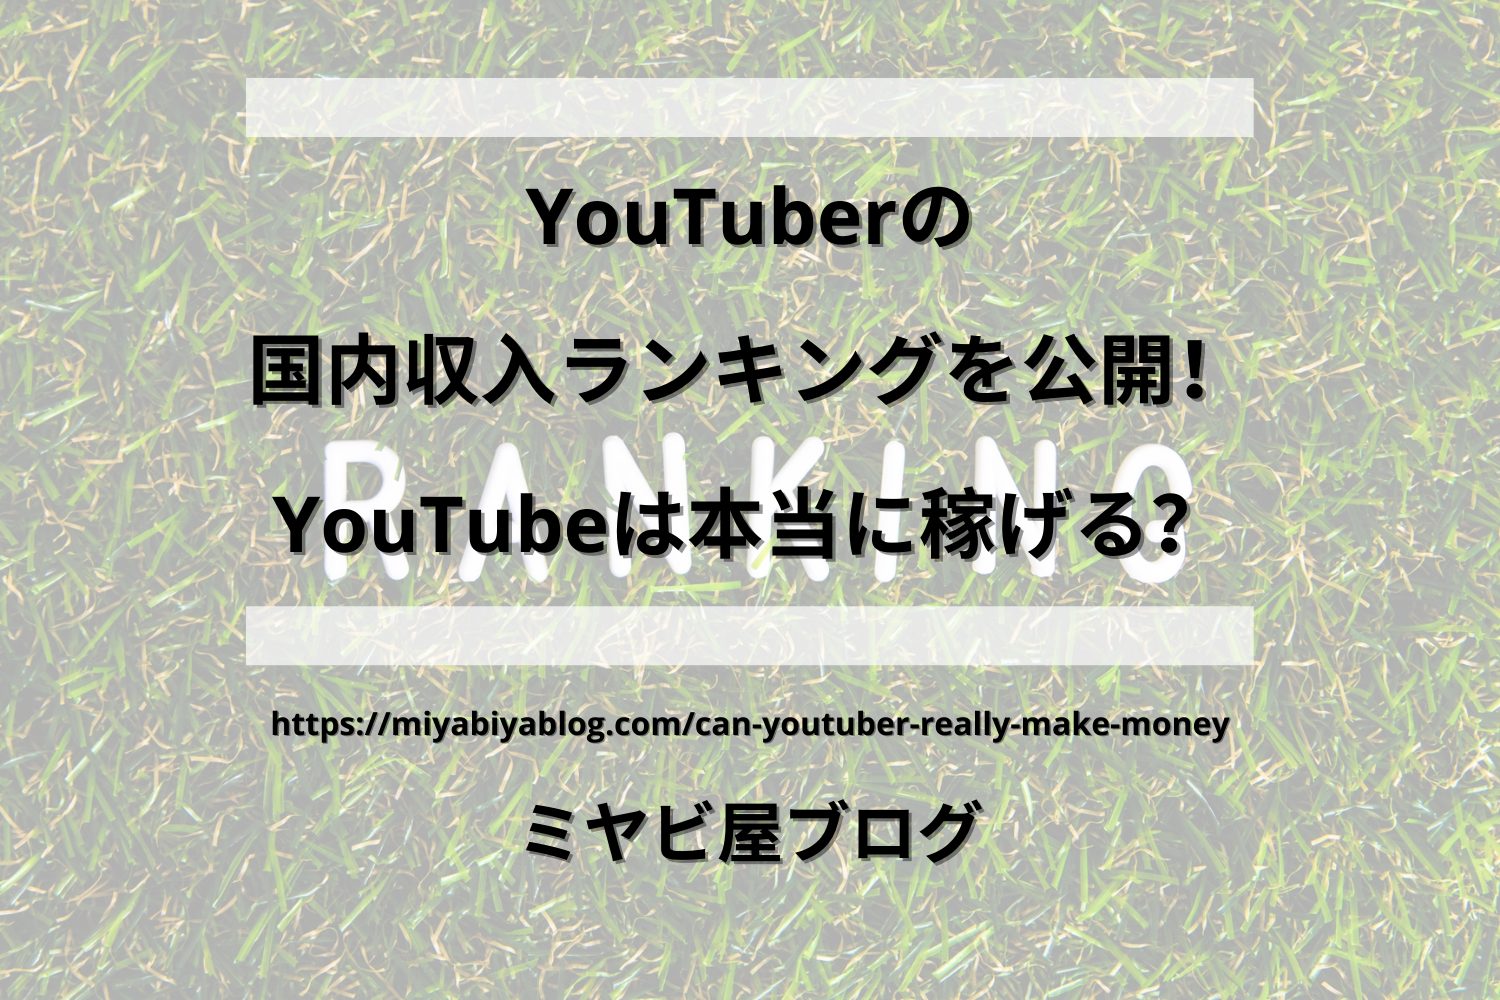 「YouTuberの国内収入ランキングを公開！YouTubeは本当に稼げる？」のイメージ画像。芝生の上にランキングと書かれている画像を背景に記事タイトルが表示されている。